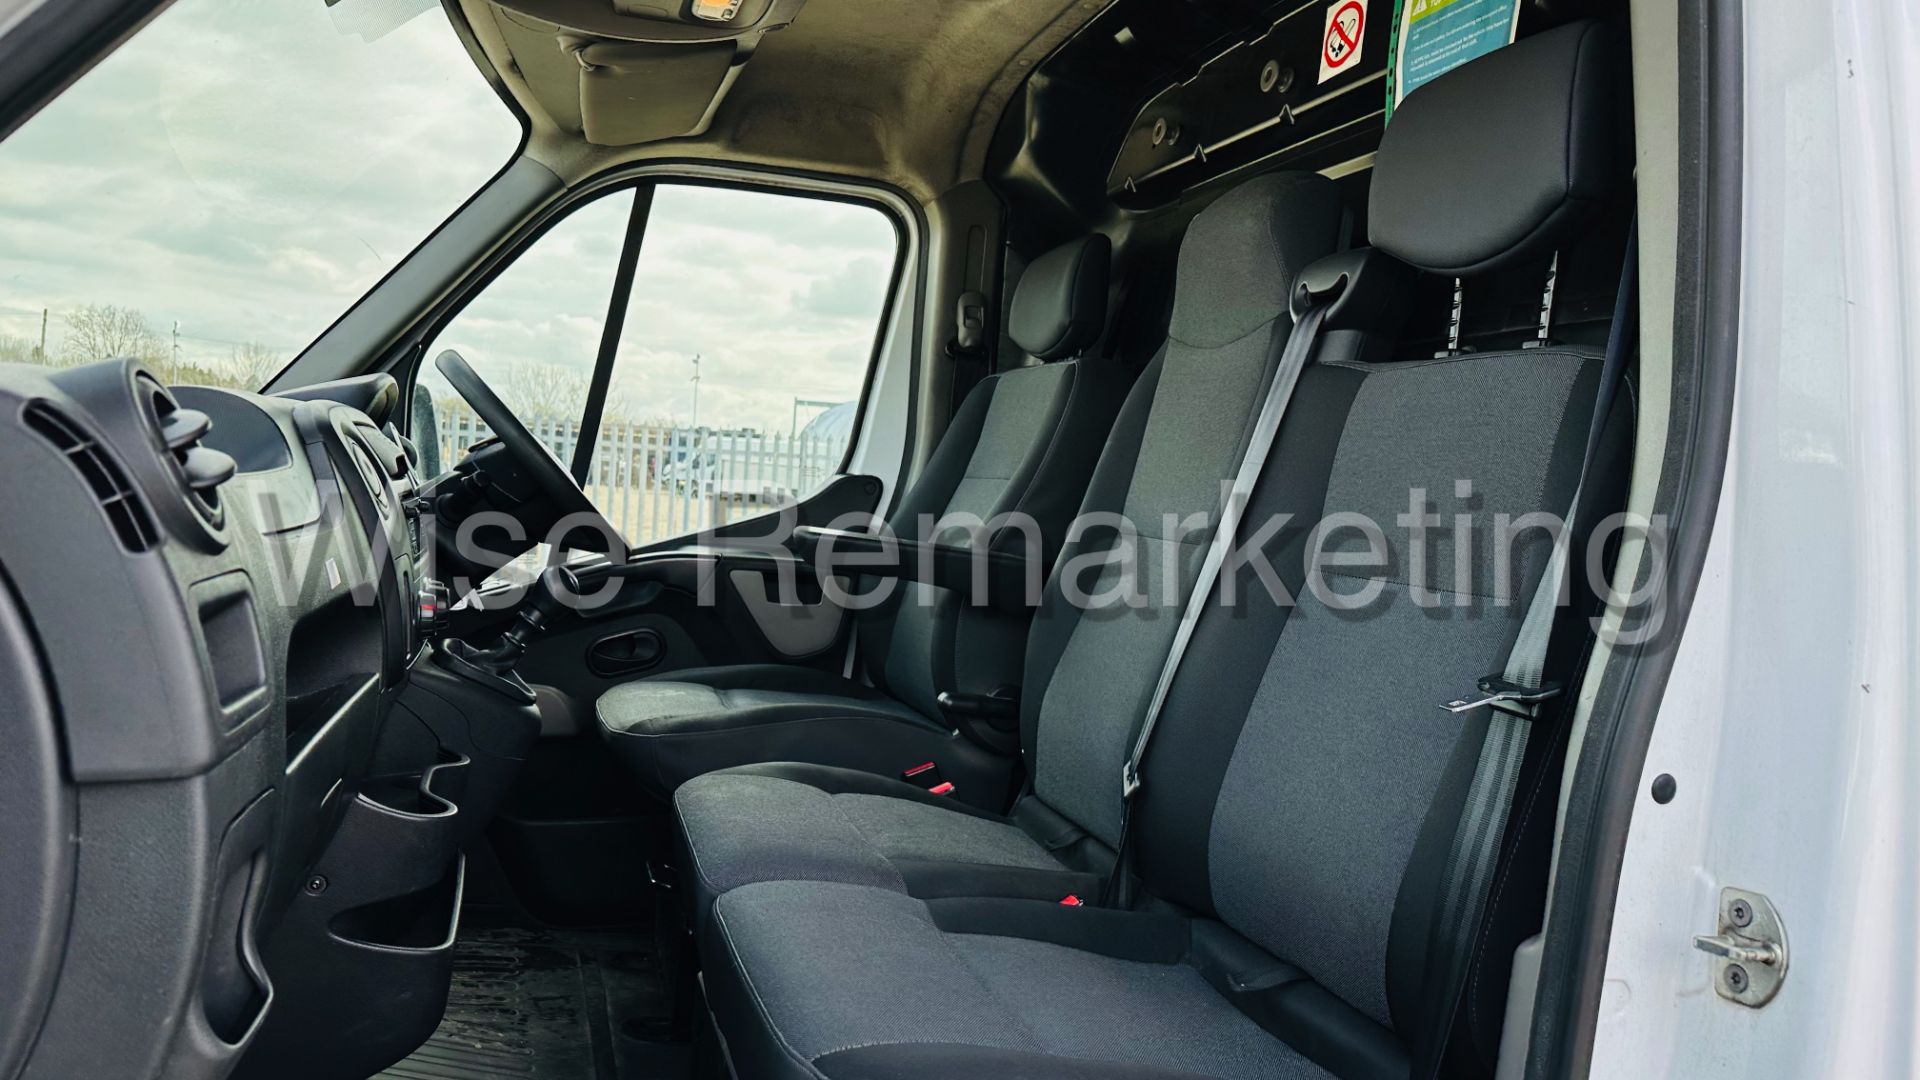 (RESERVE MET)Renault Master LL35 *LWB - LowLoader / Luton Box Van (2019) 6 Speed *Air Con* (Euro 6) - Image 13 of 30